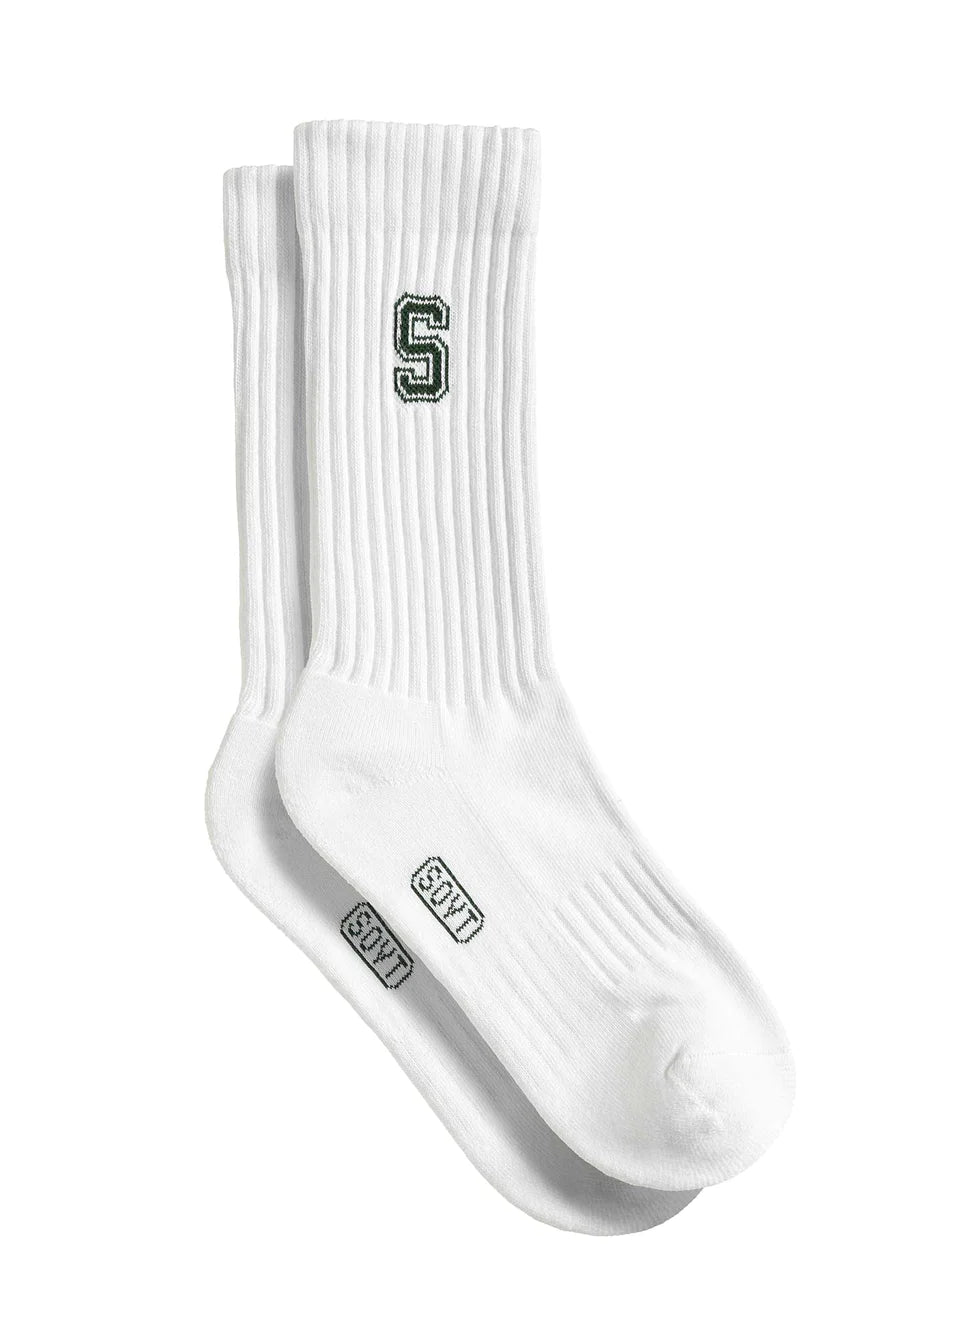 College Socks - white-green